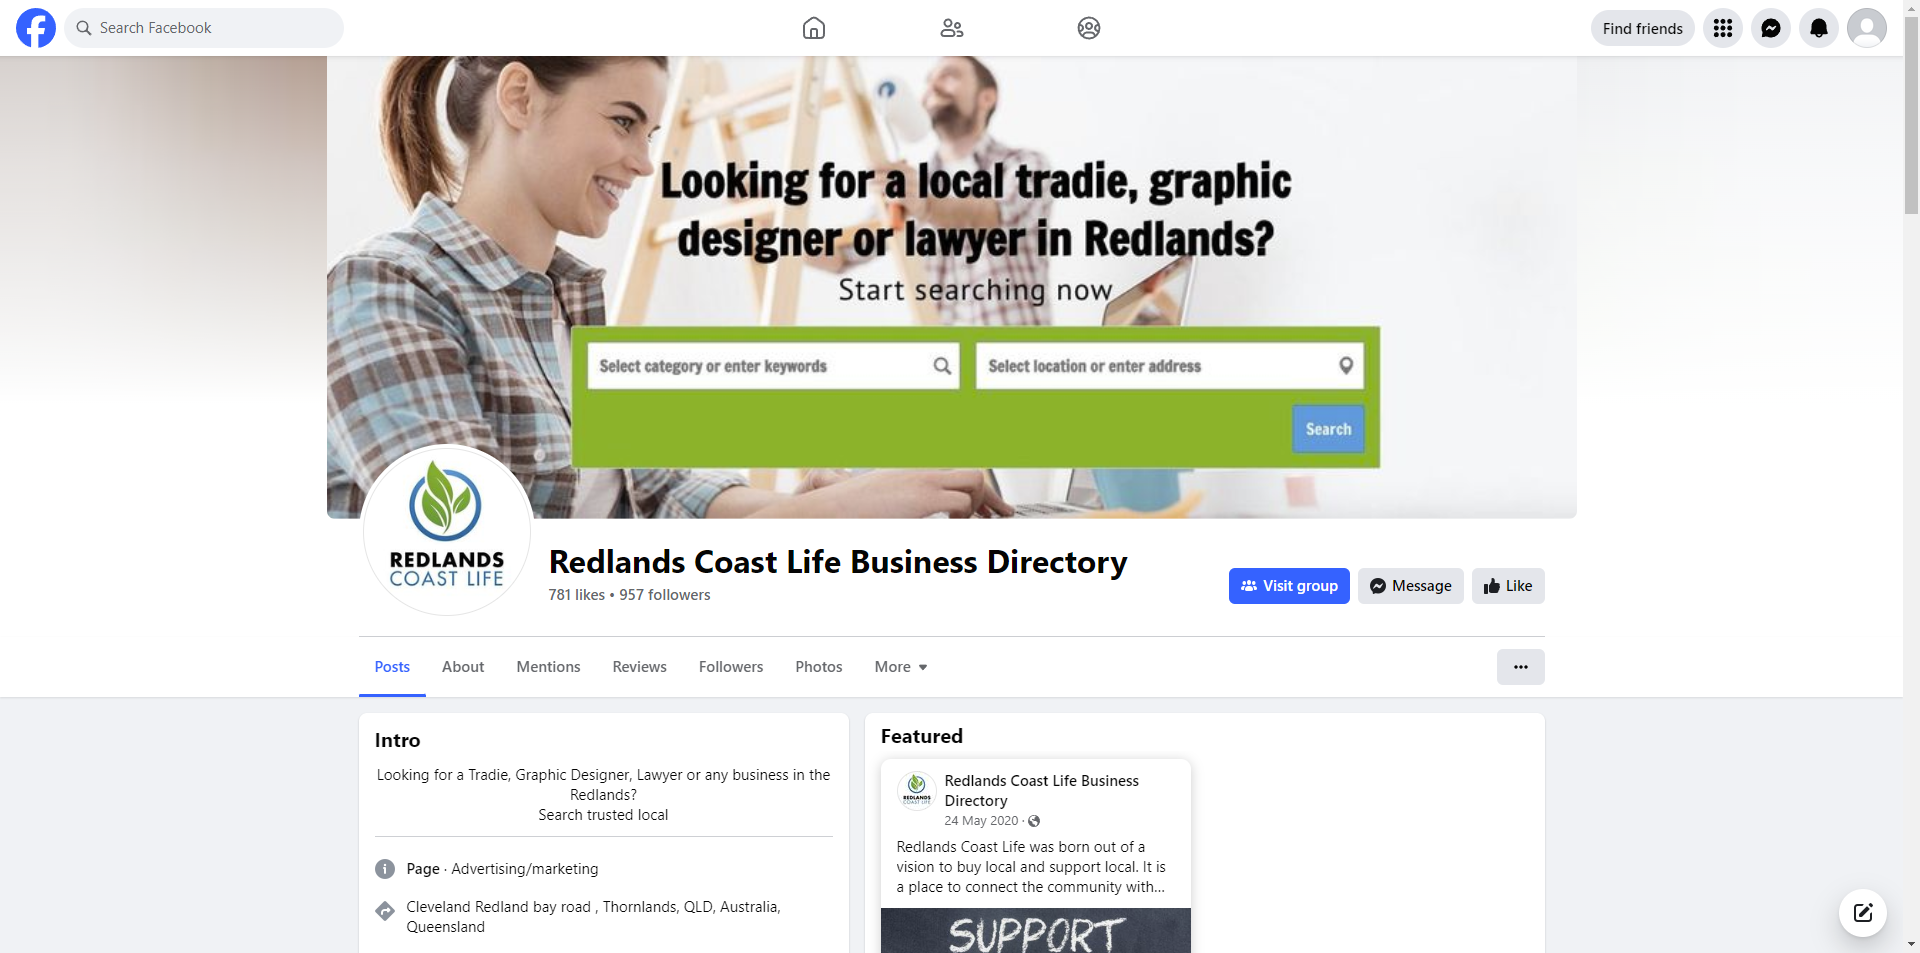 Redlands Coast Life Business Directory